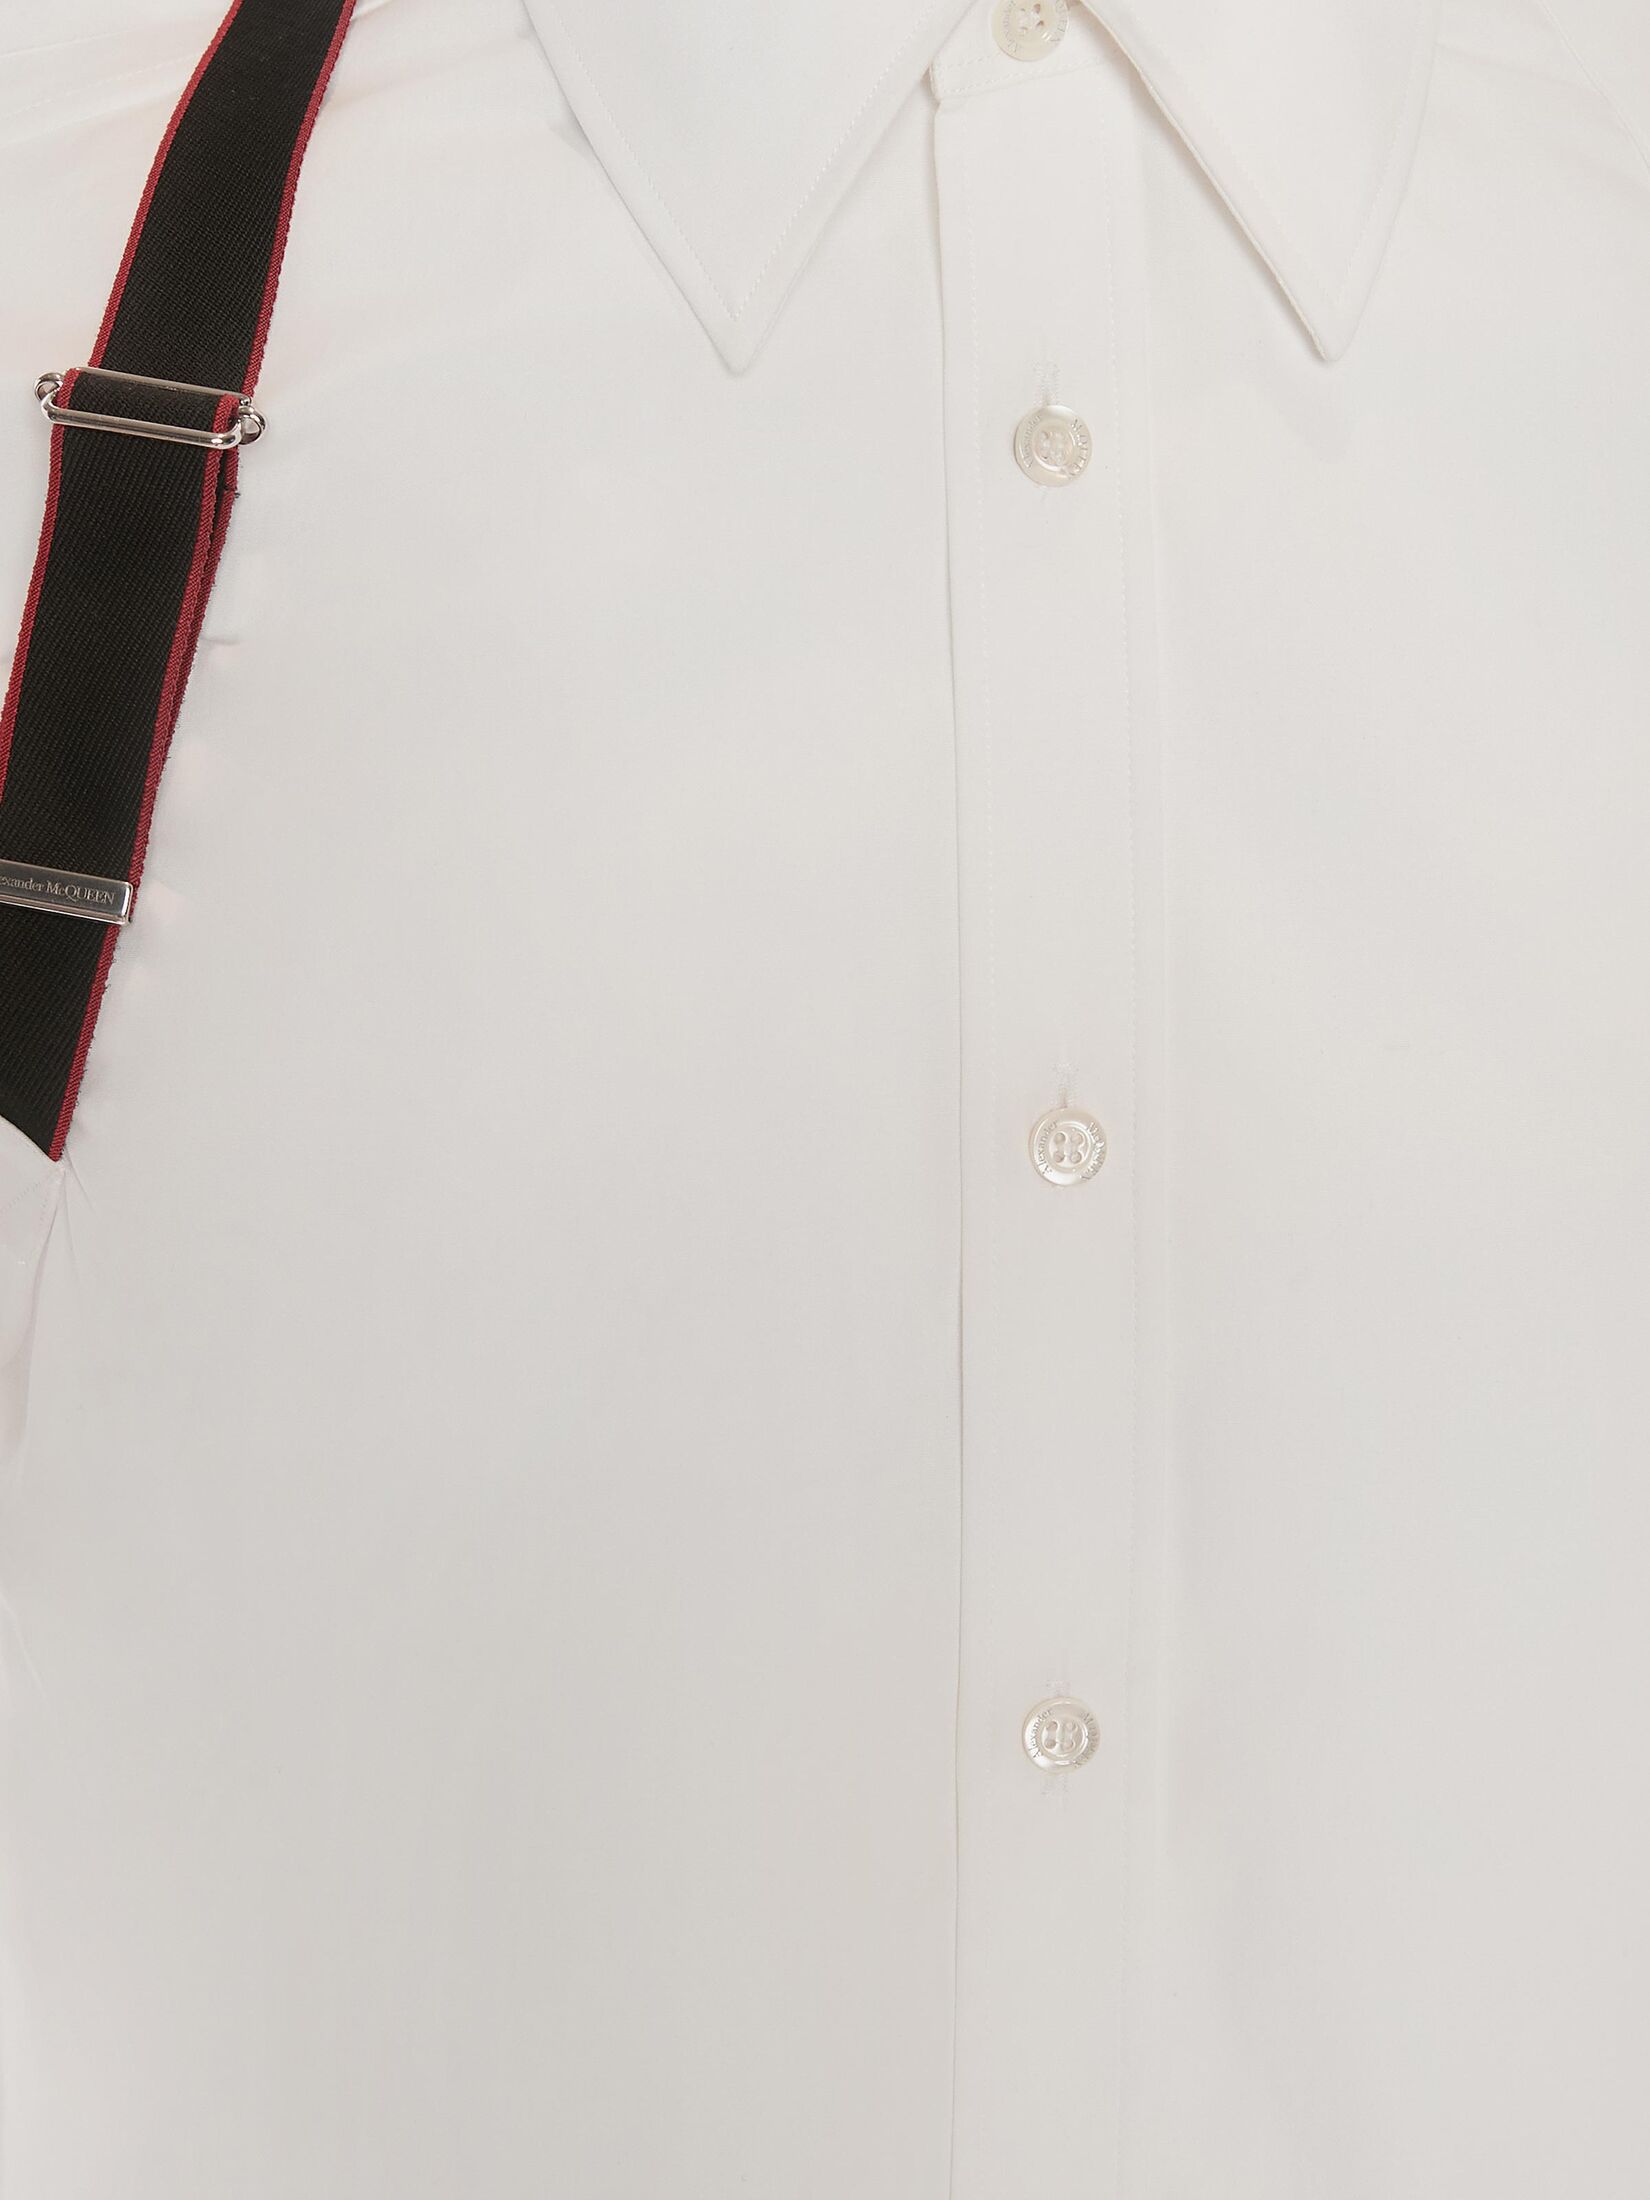 Alexander McQueen標誌束帶襯衫